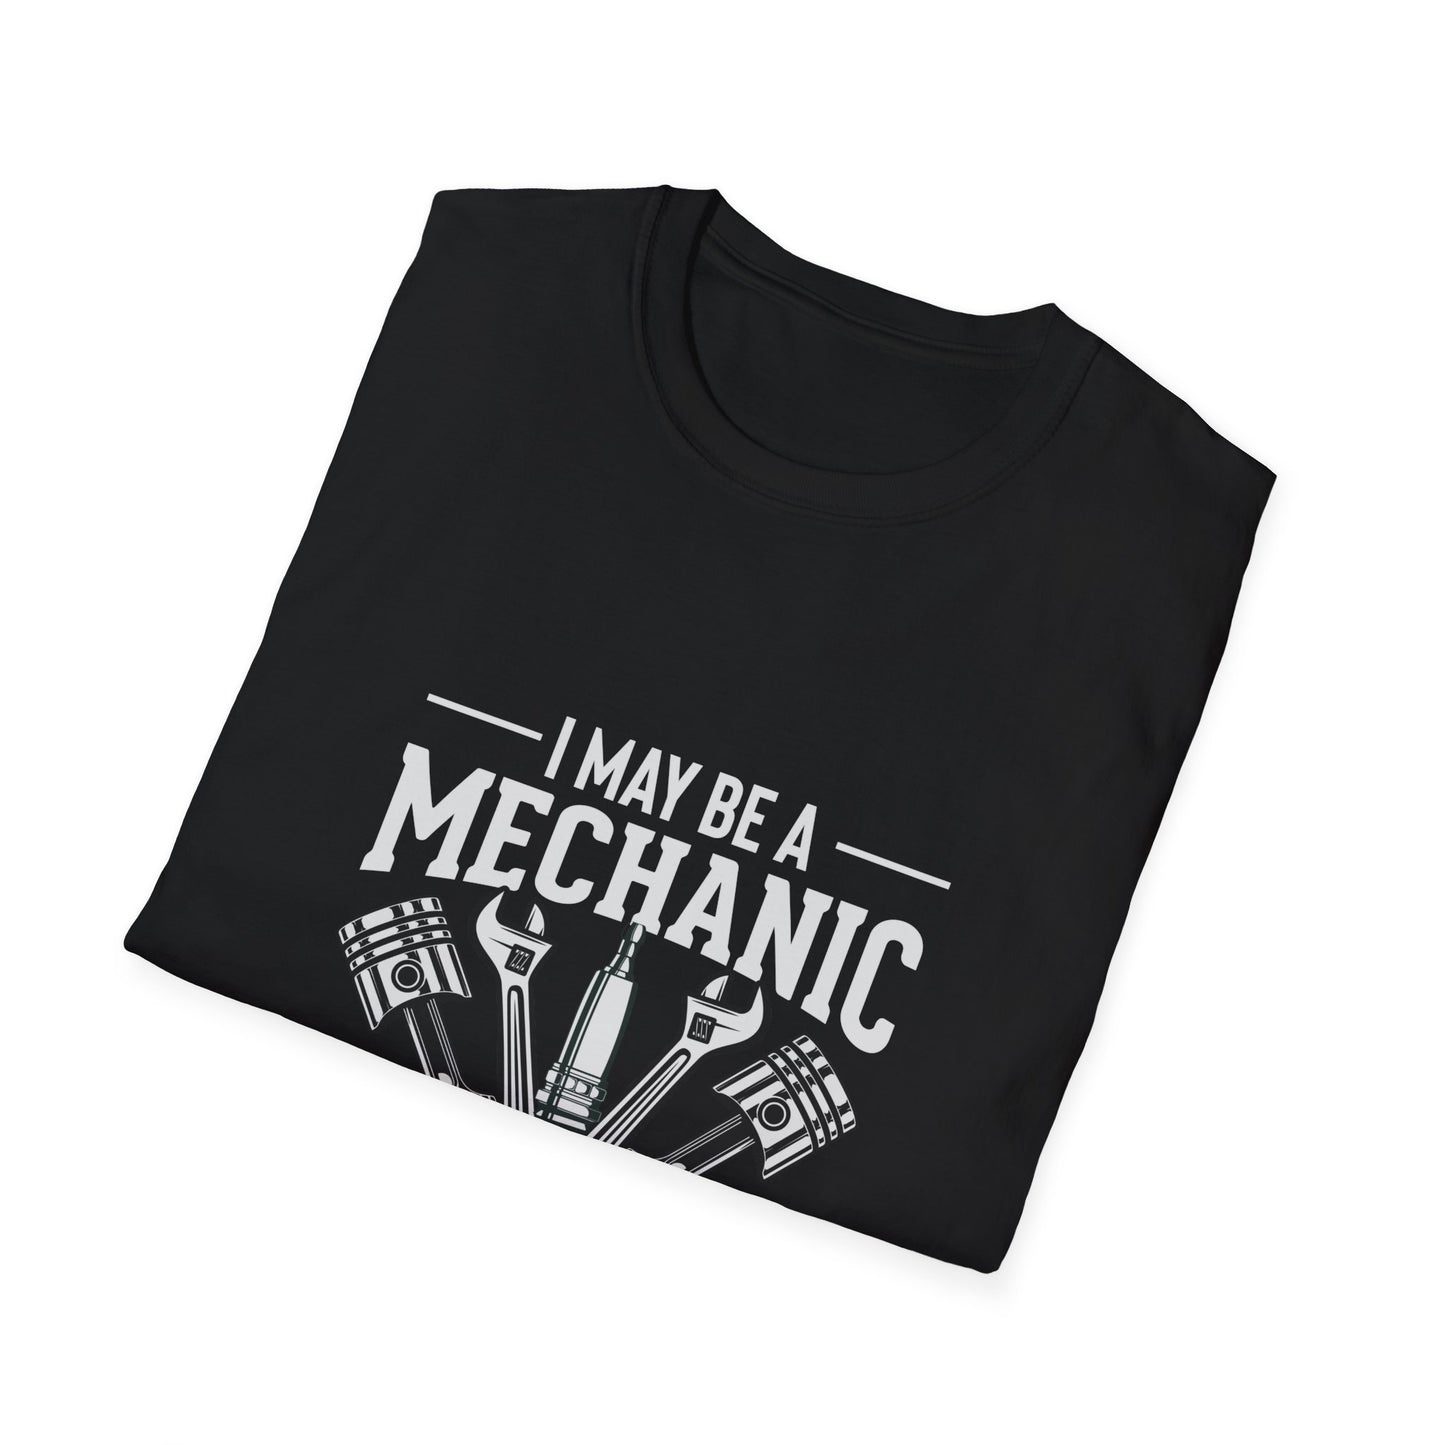 I may be a mechanic - Softstyle T-Shirt